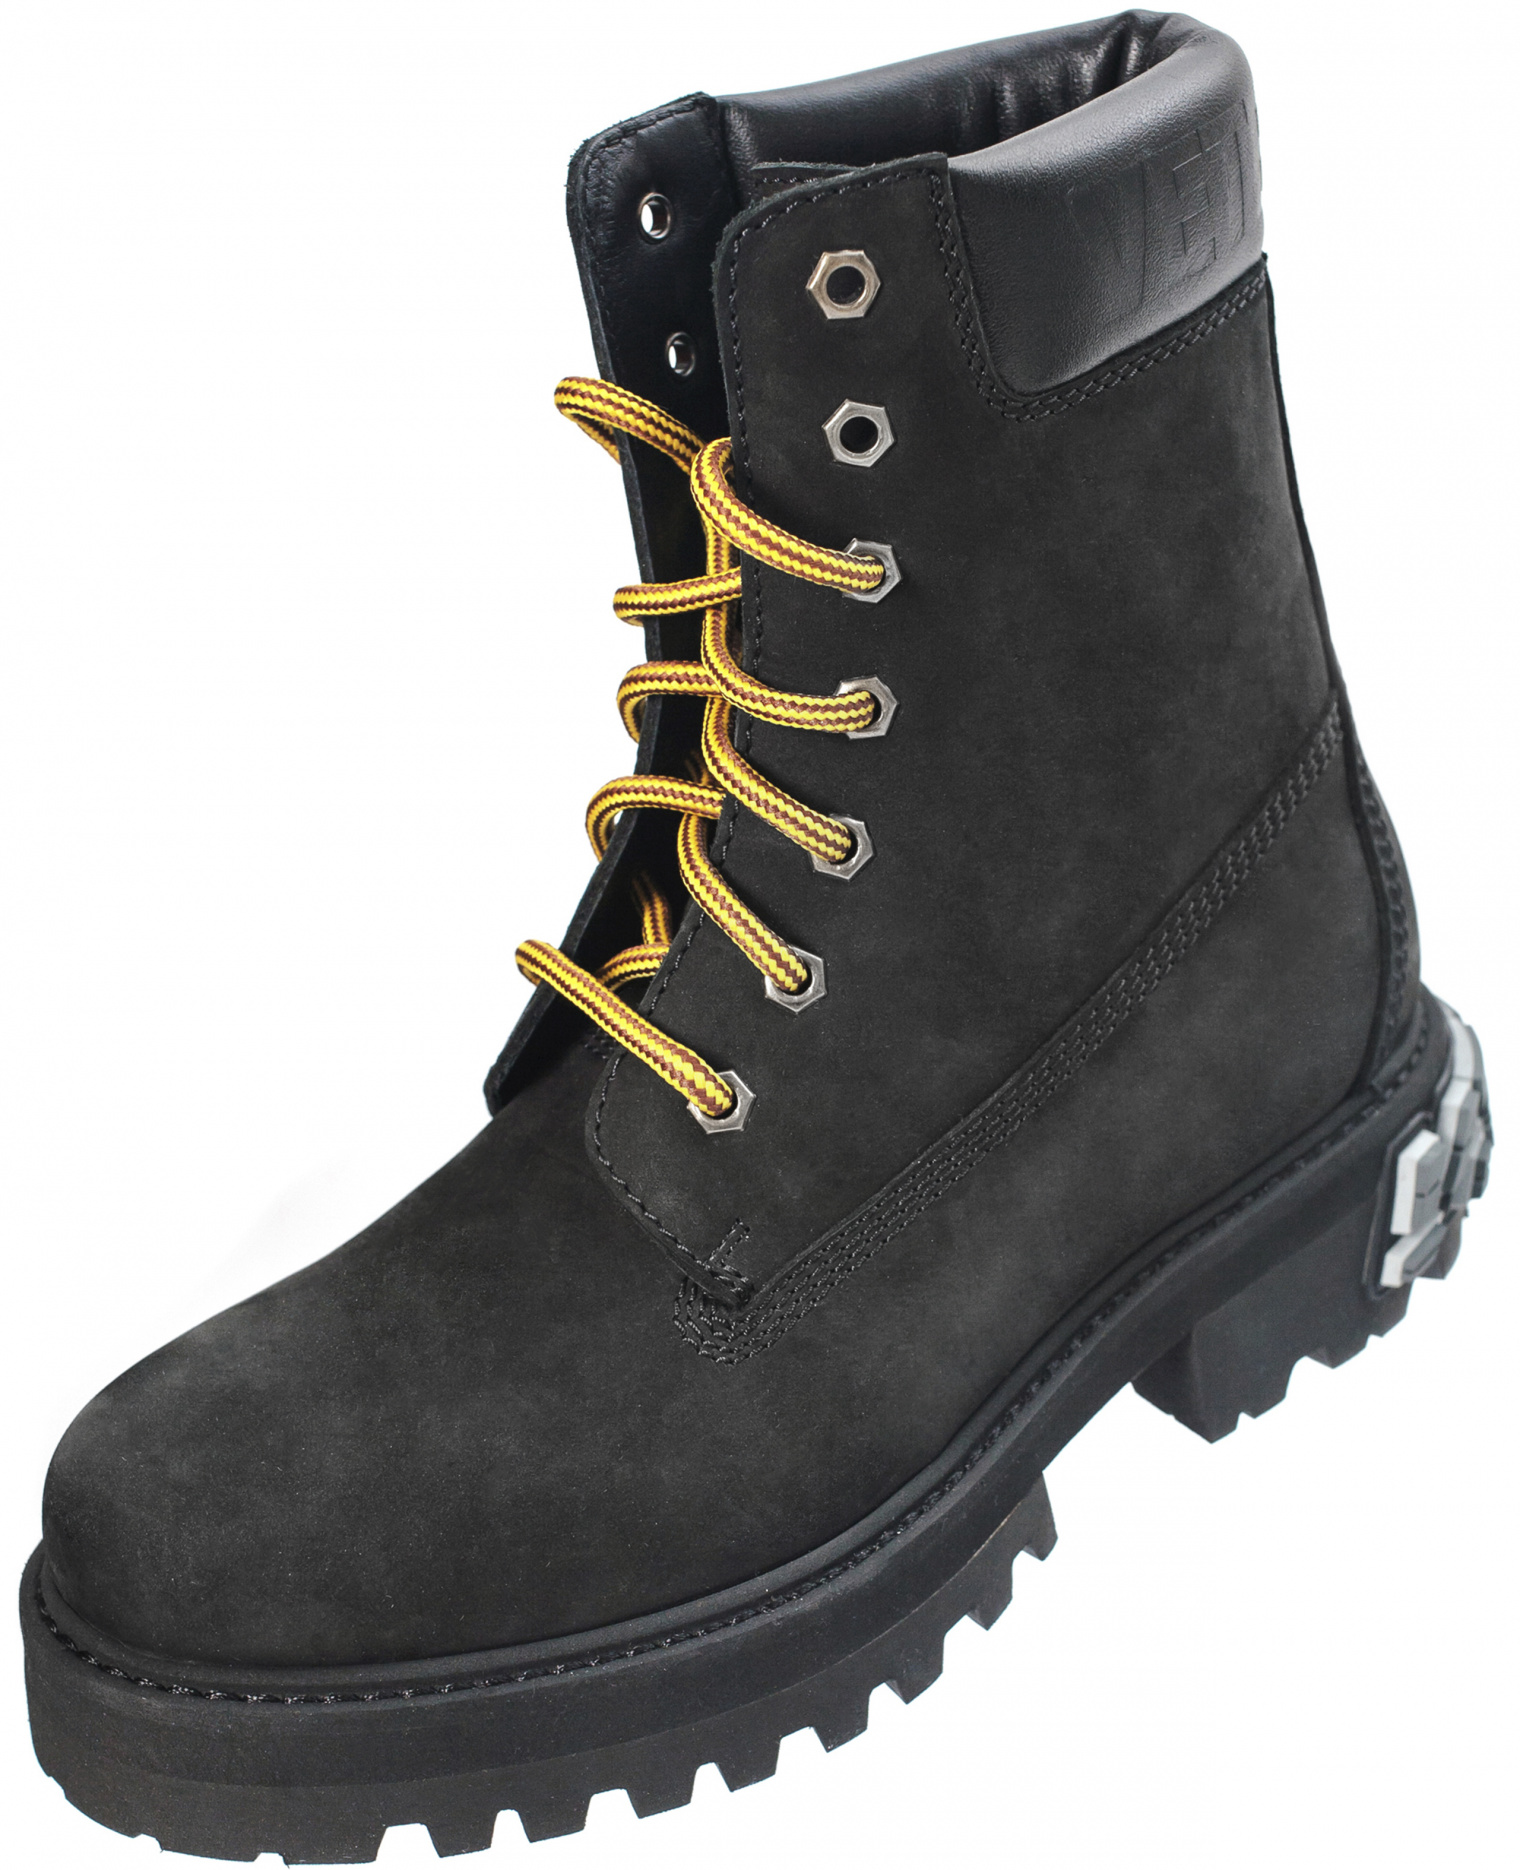 Buy VETEMENTS men black rubbered logo boots for $723 online on